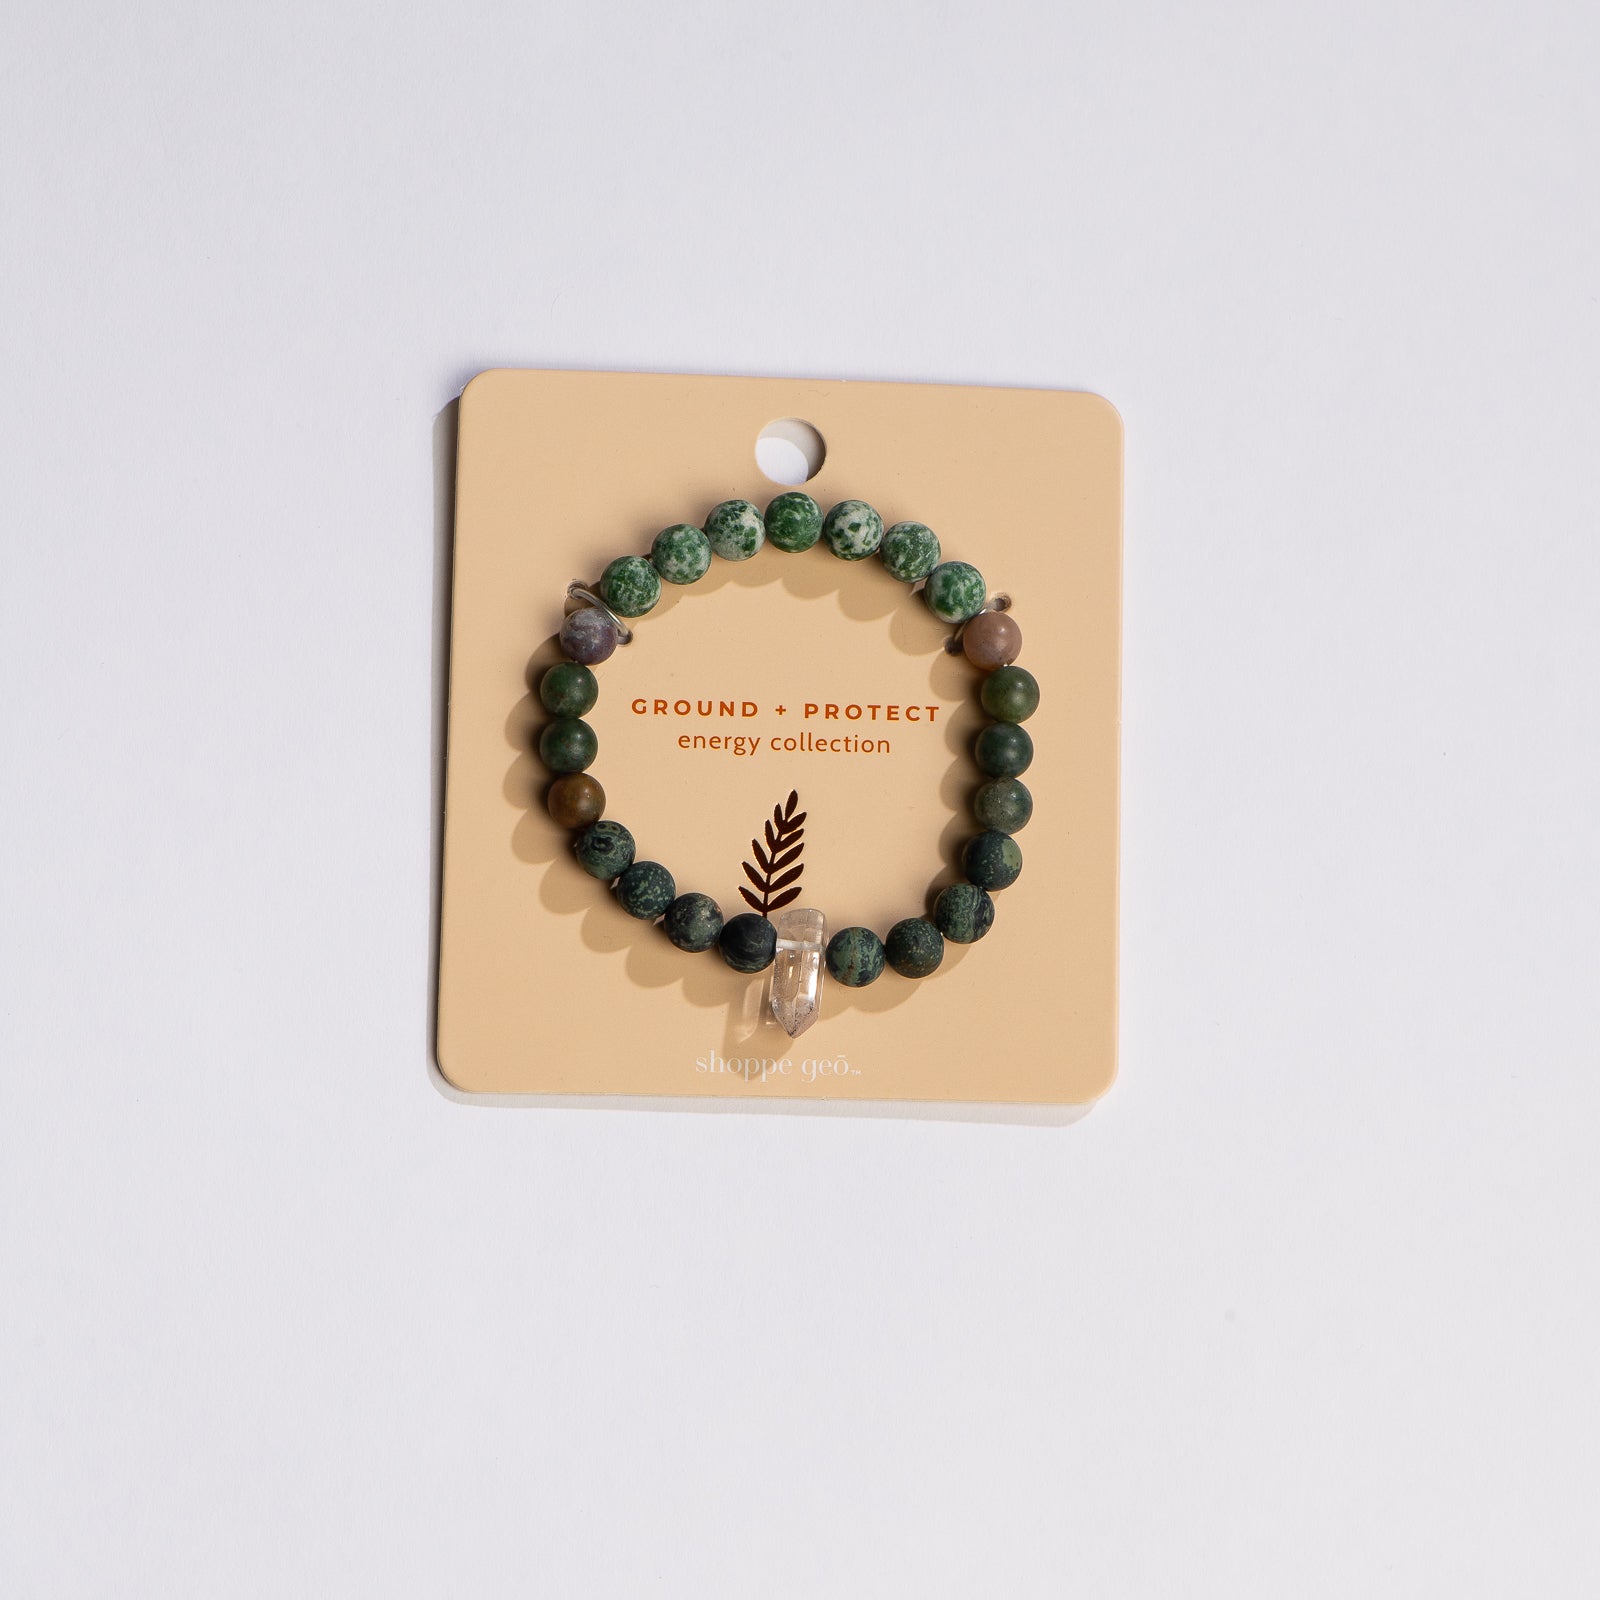 shoppe geo energy collection ground protet gemstone bracelet